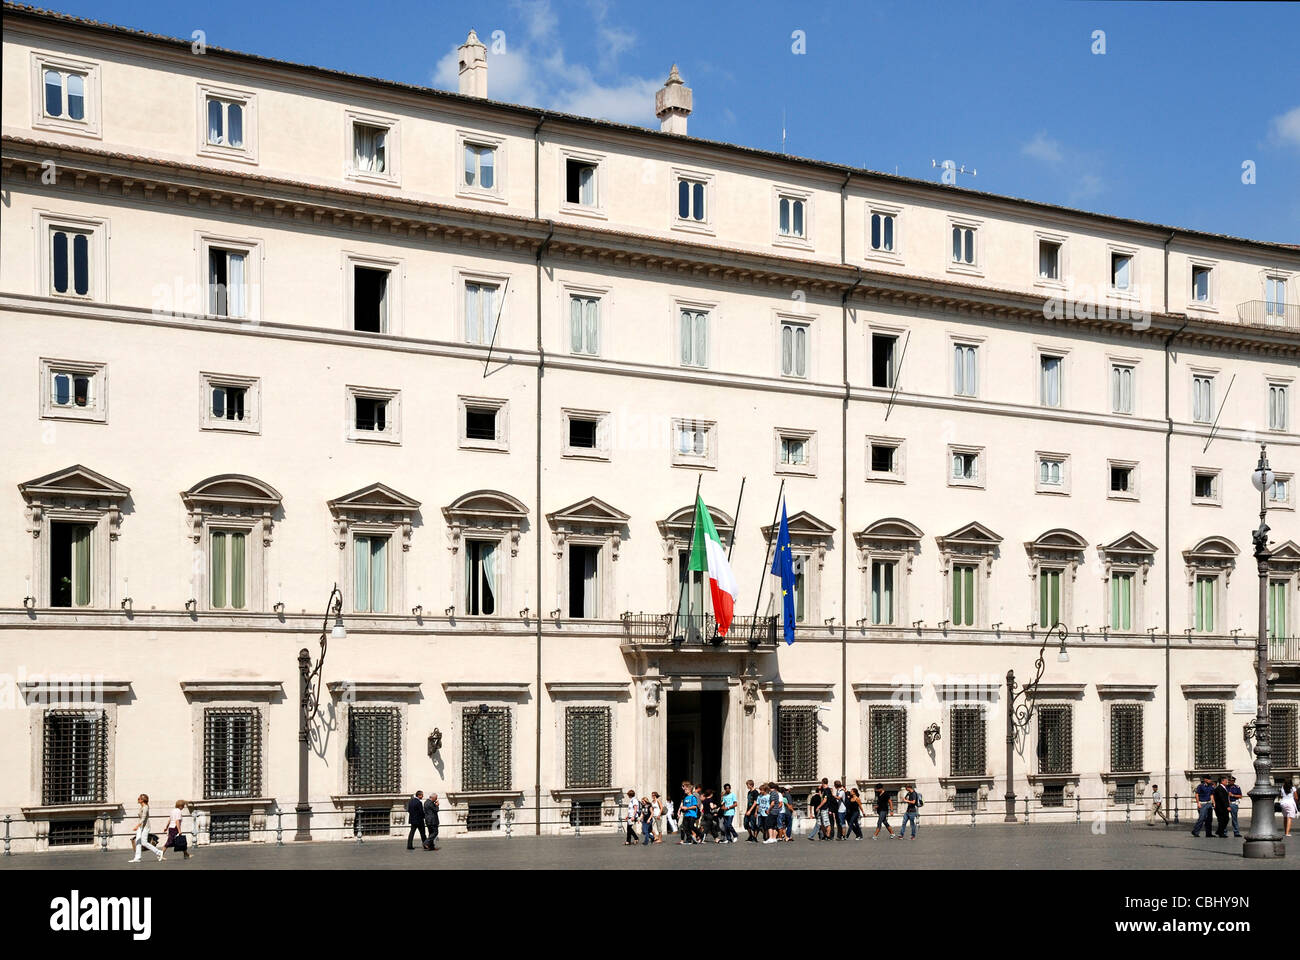 Palazzo Chigi in Rom - Residenz des italienischen Ministerpräsidenten. Stockfoto